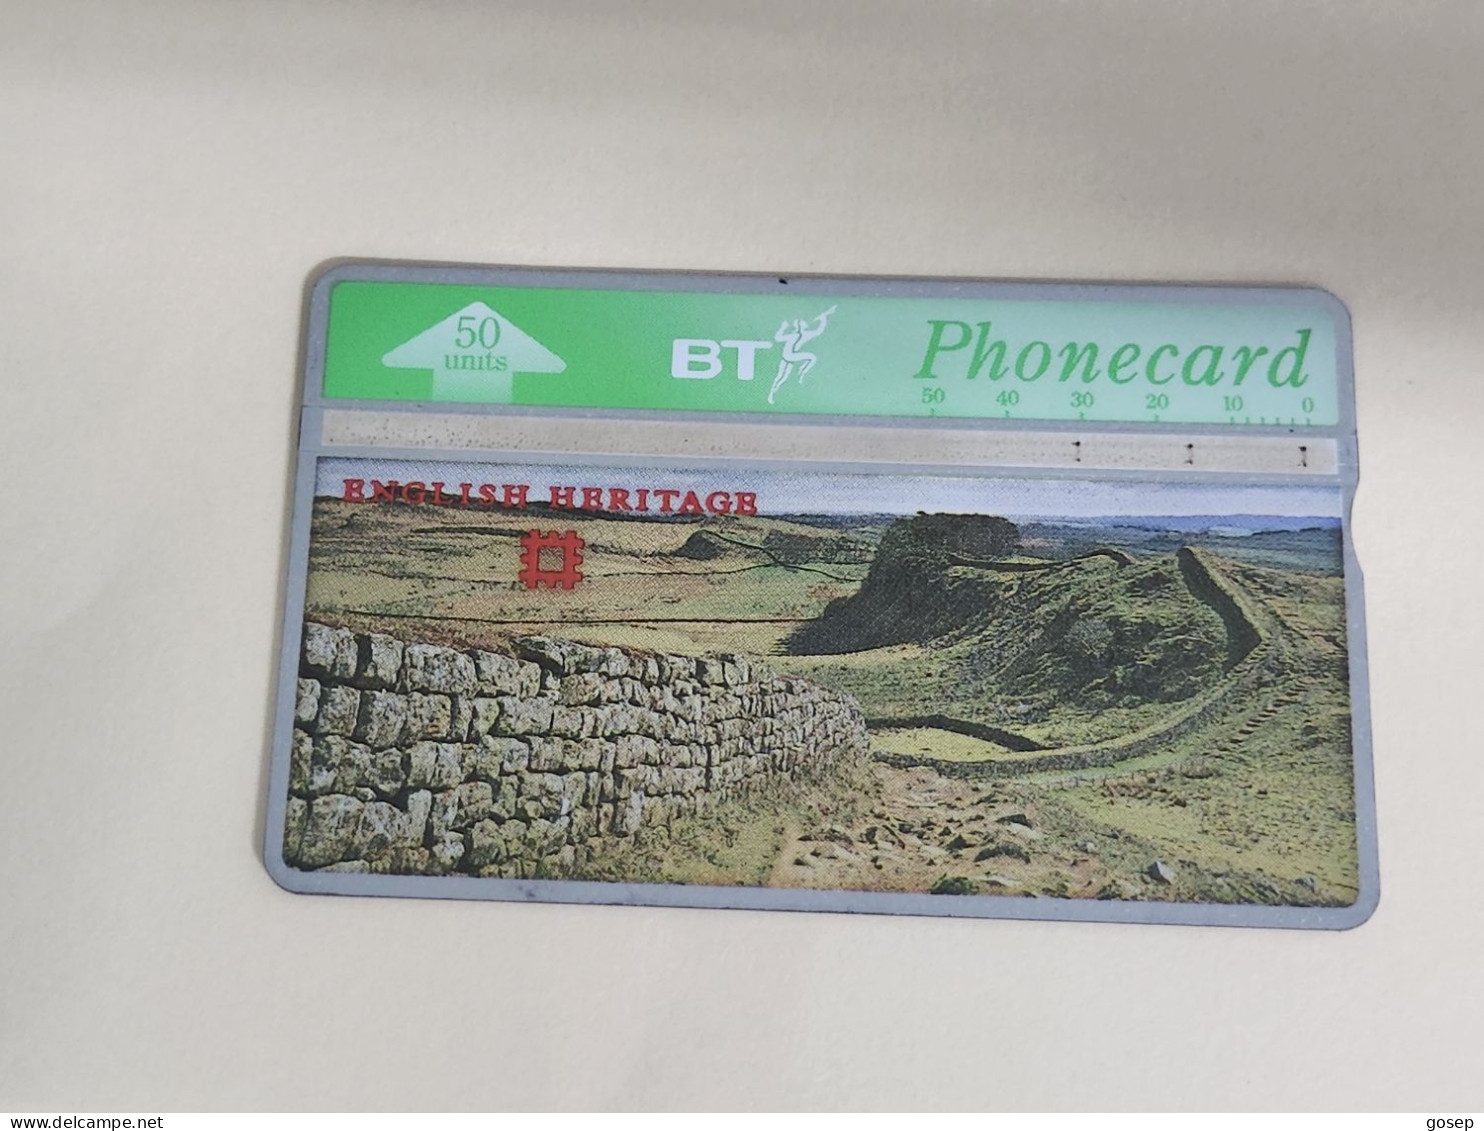 United Kingdom-(BTA107)-HERITAGE-Hadrian's Wall-(176)(50units)(527K18056)price Cataloge3.00£-used+1card Prepiad Free - BT Emissions Publicitaires